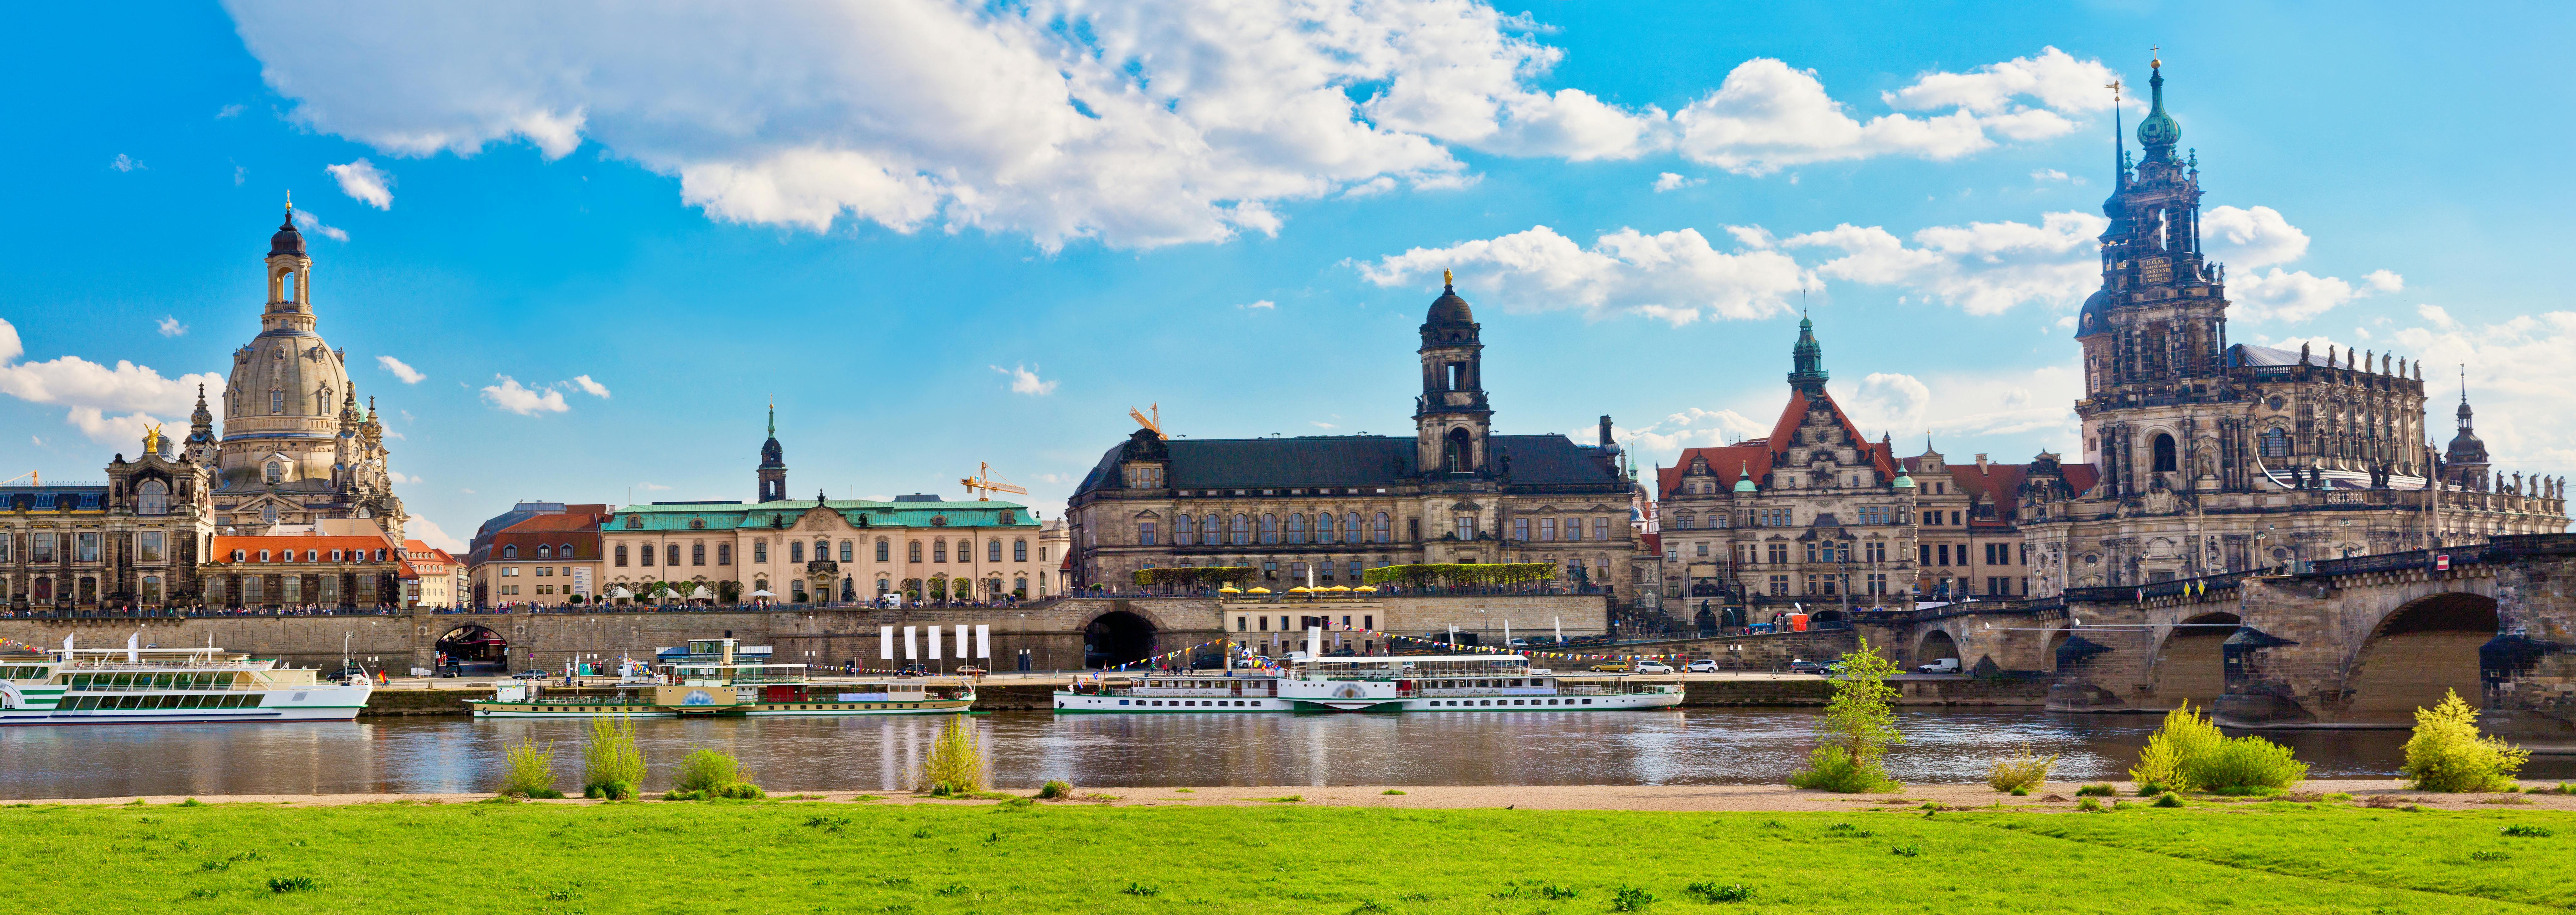 Dresden big city tour by bike Musement